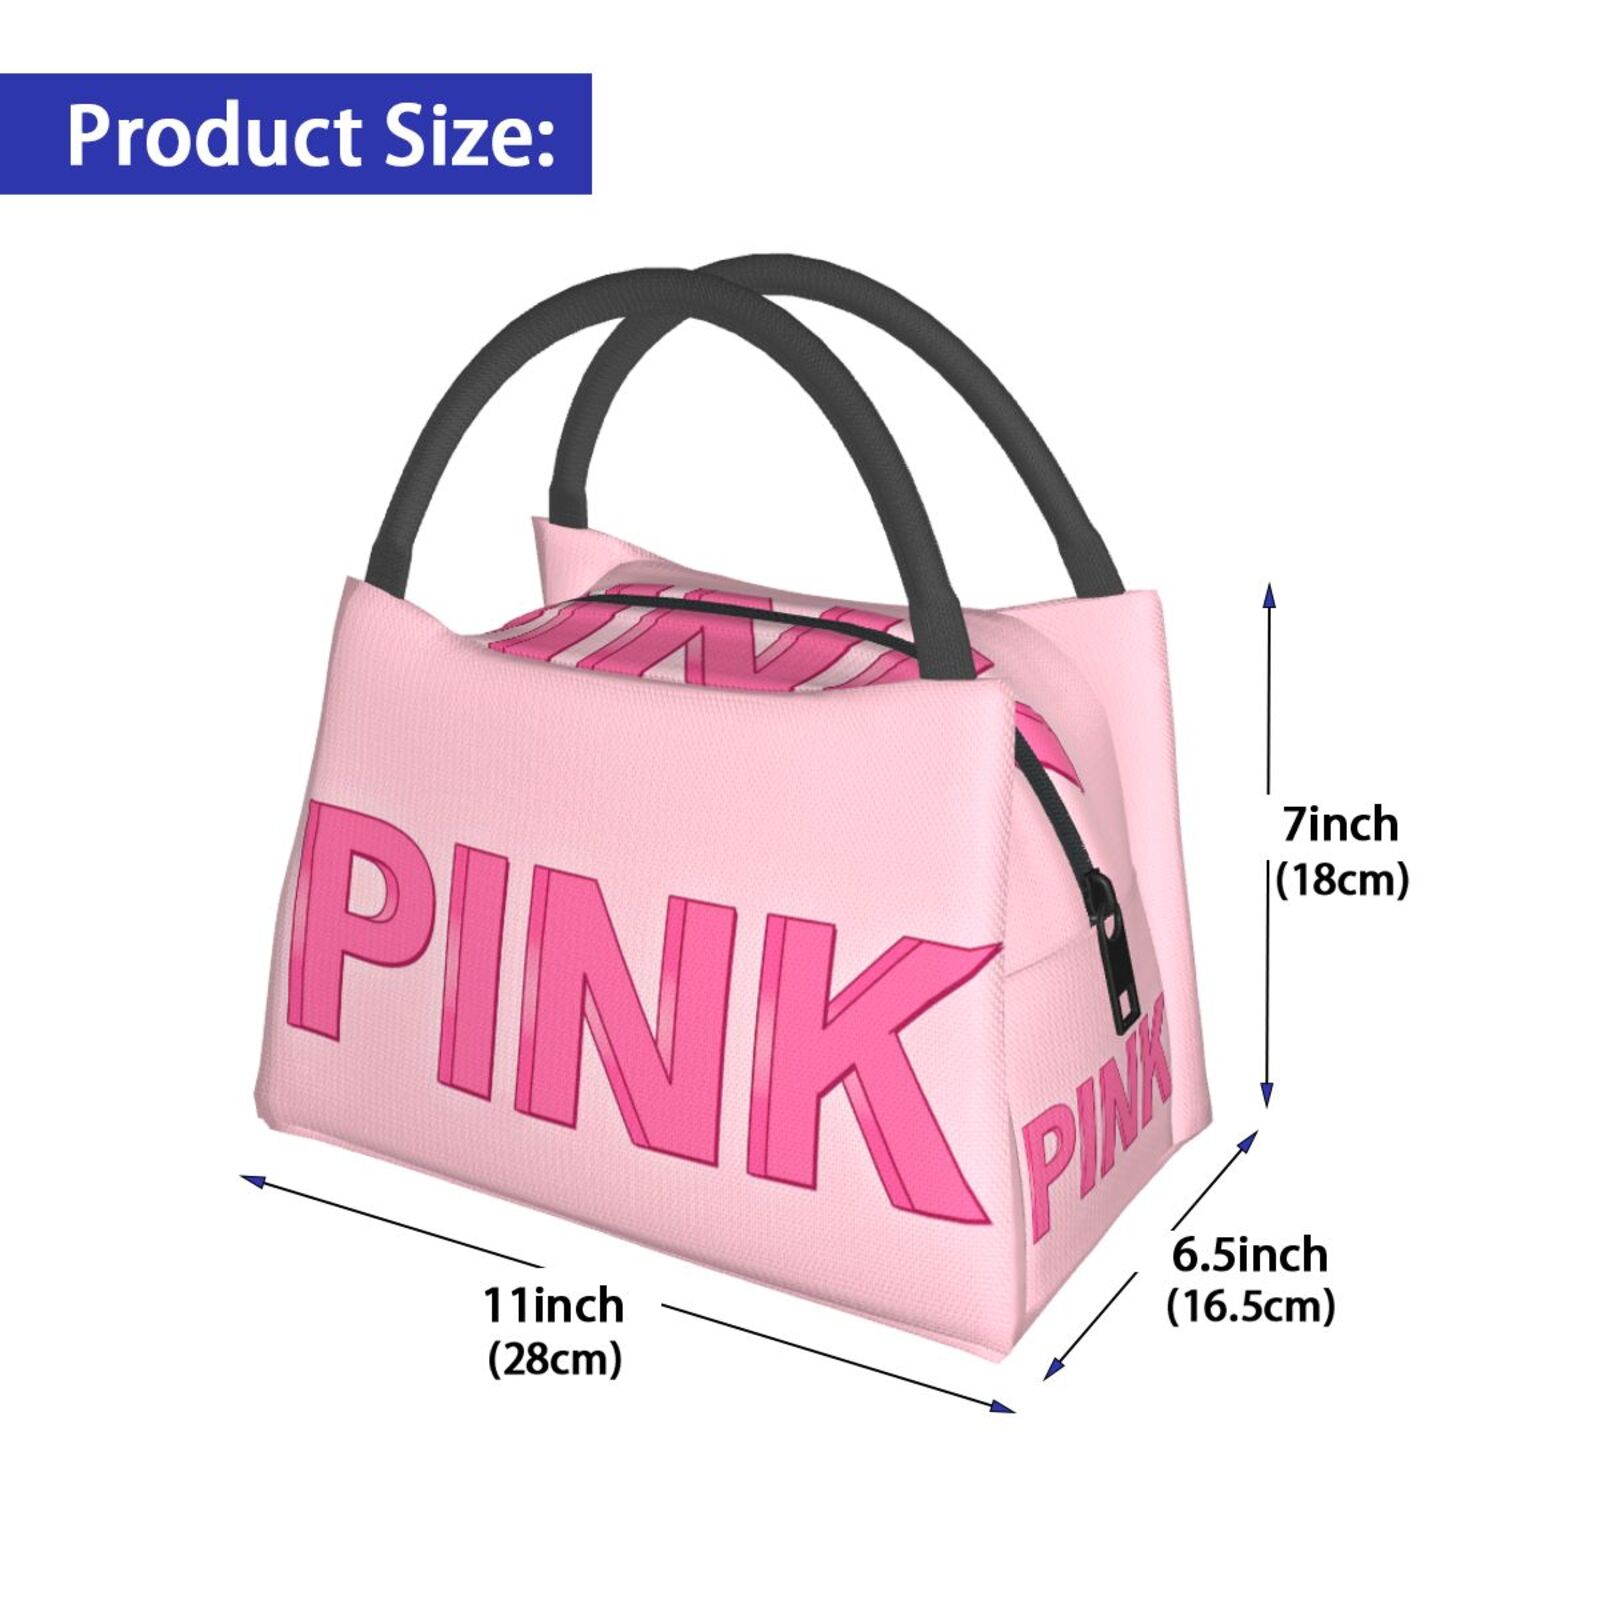 3D PRIMEL Pink Bag Bag Bolsa Bolsa Mulher Lunhana para Trabalho com Tote com Lunch Saga Kawaii Girl Shcool Picnic Office